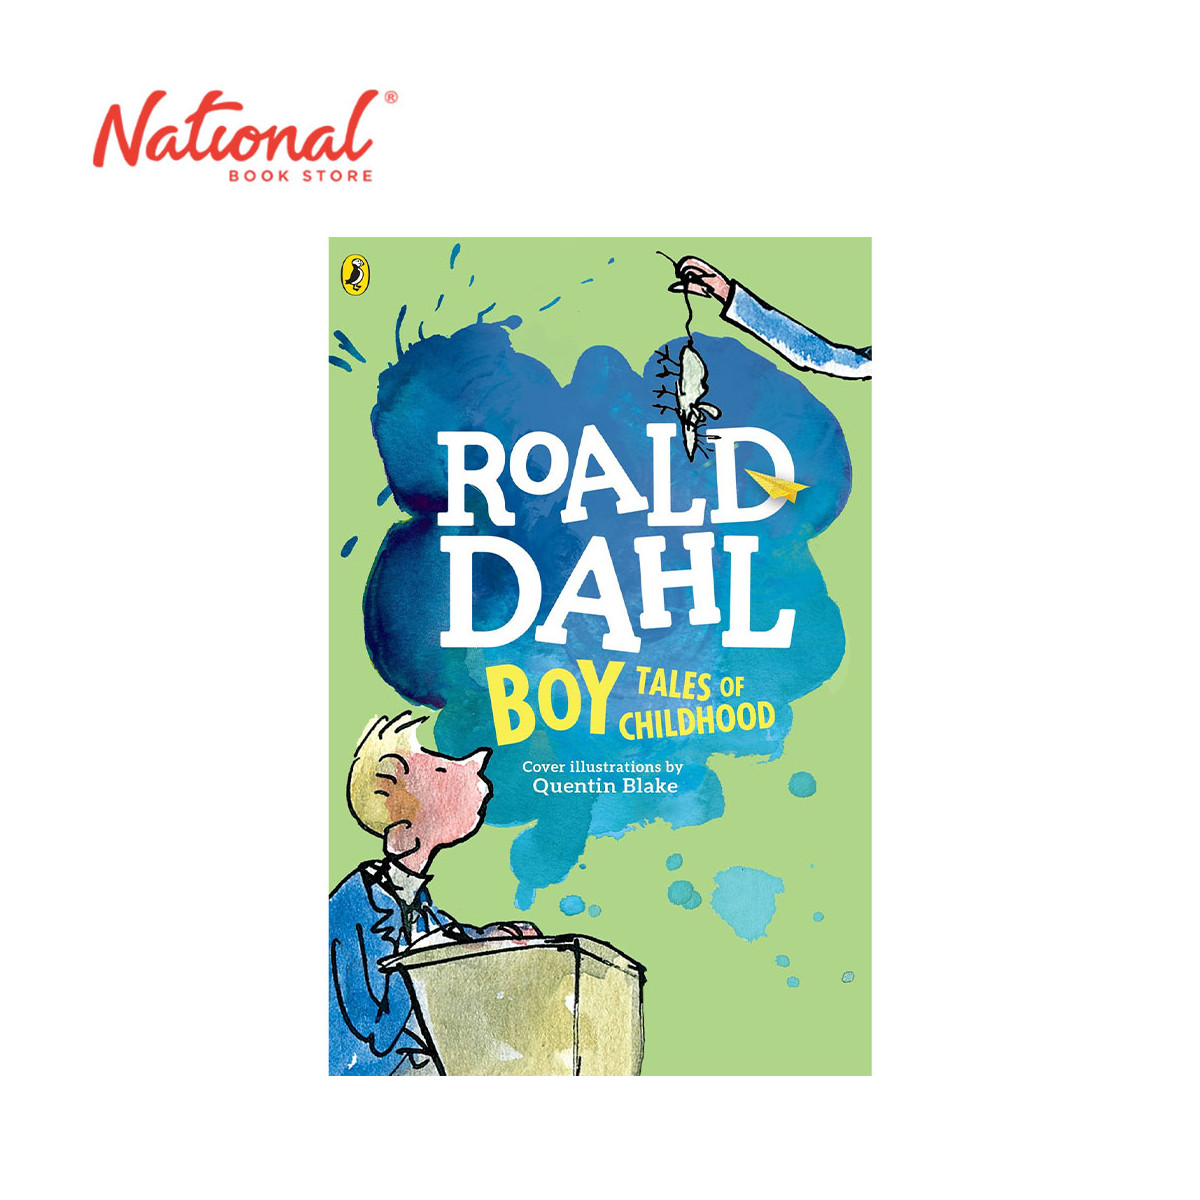 Boy: Tales of Childhood By Roald Dahl - Trade Paperback - Children's Books